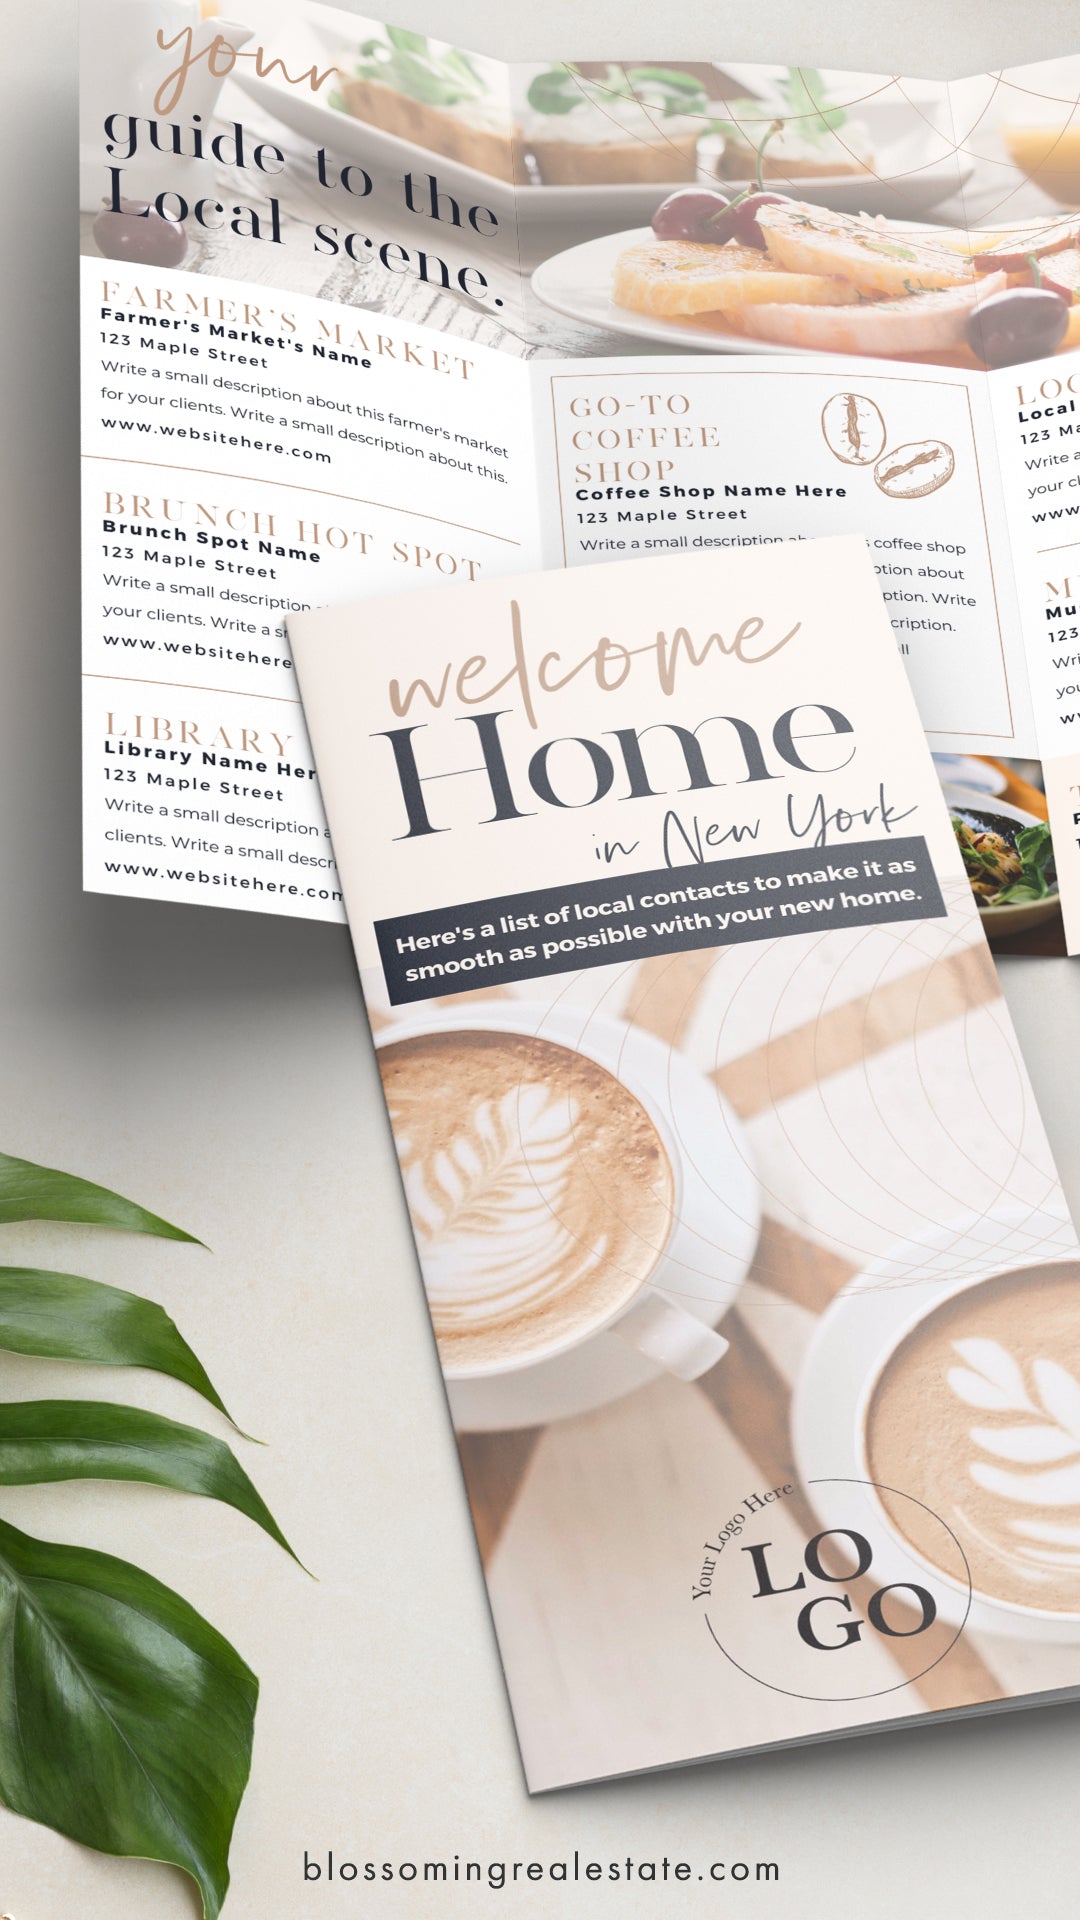 Welcome Home Brochure